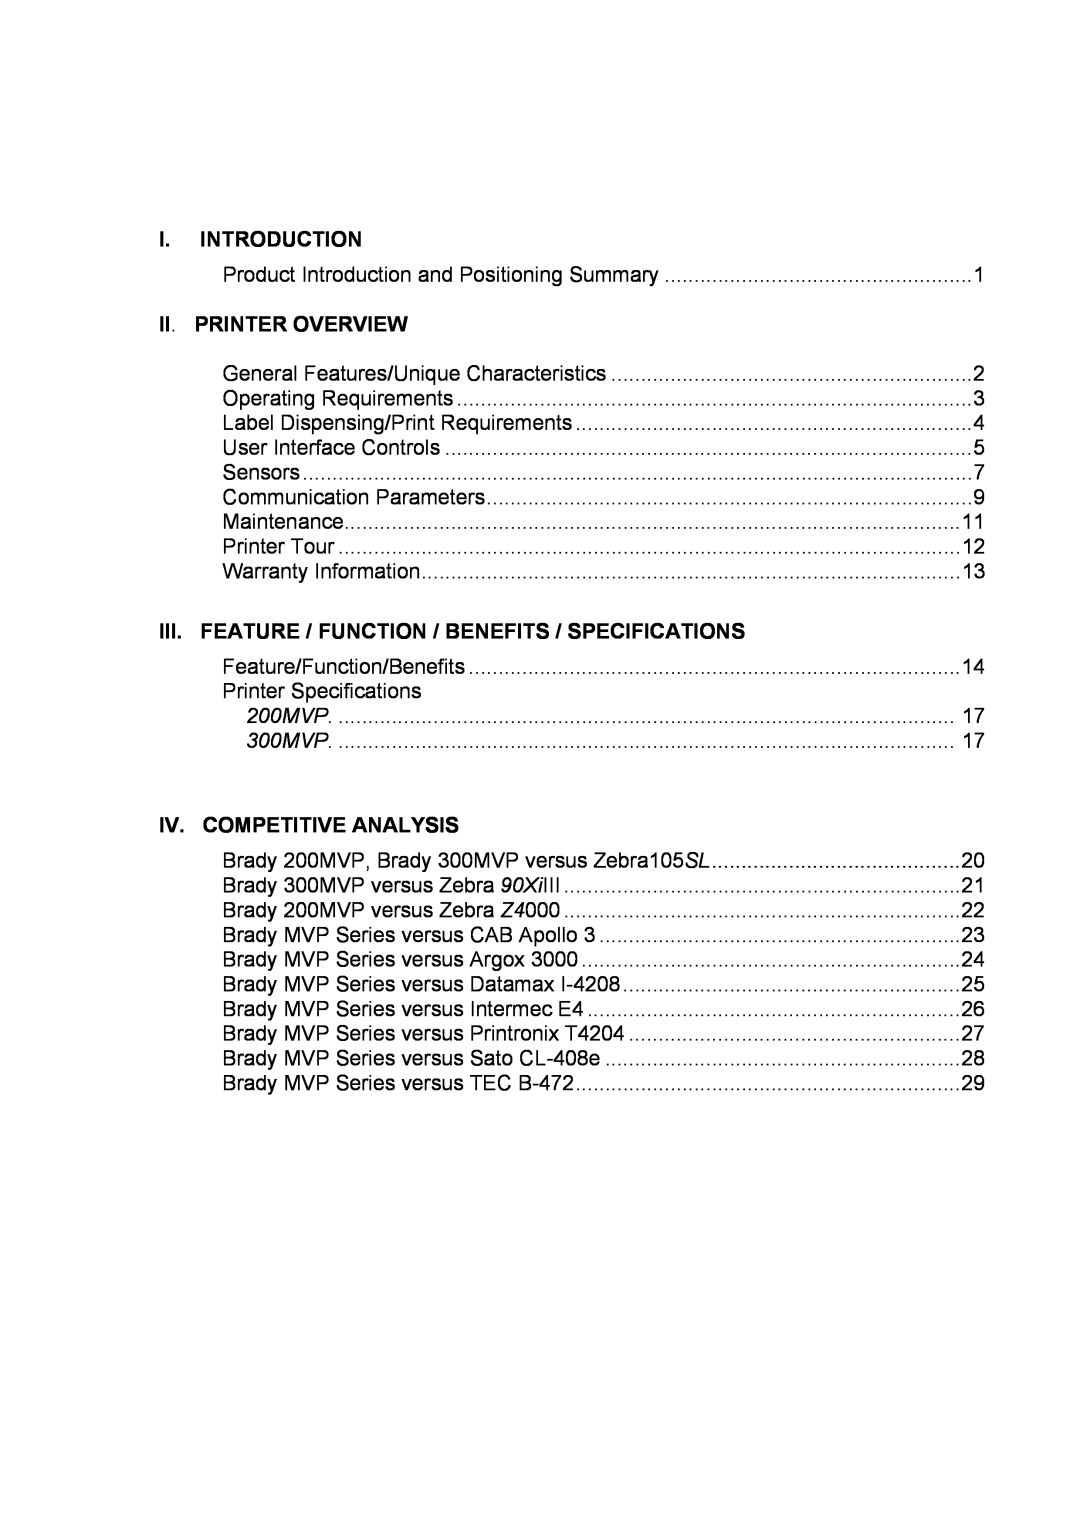 Brady manual Brady 200MVP, Brady 300MVP versus Zebra105SL, Introduction, Printer Overview, Iv. Competitive Analysis 